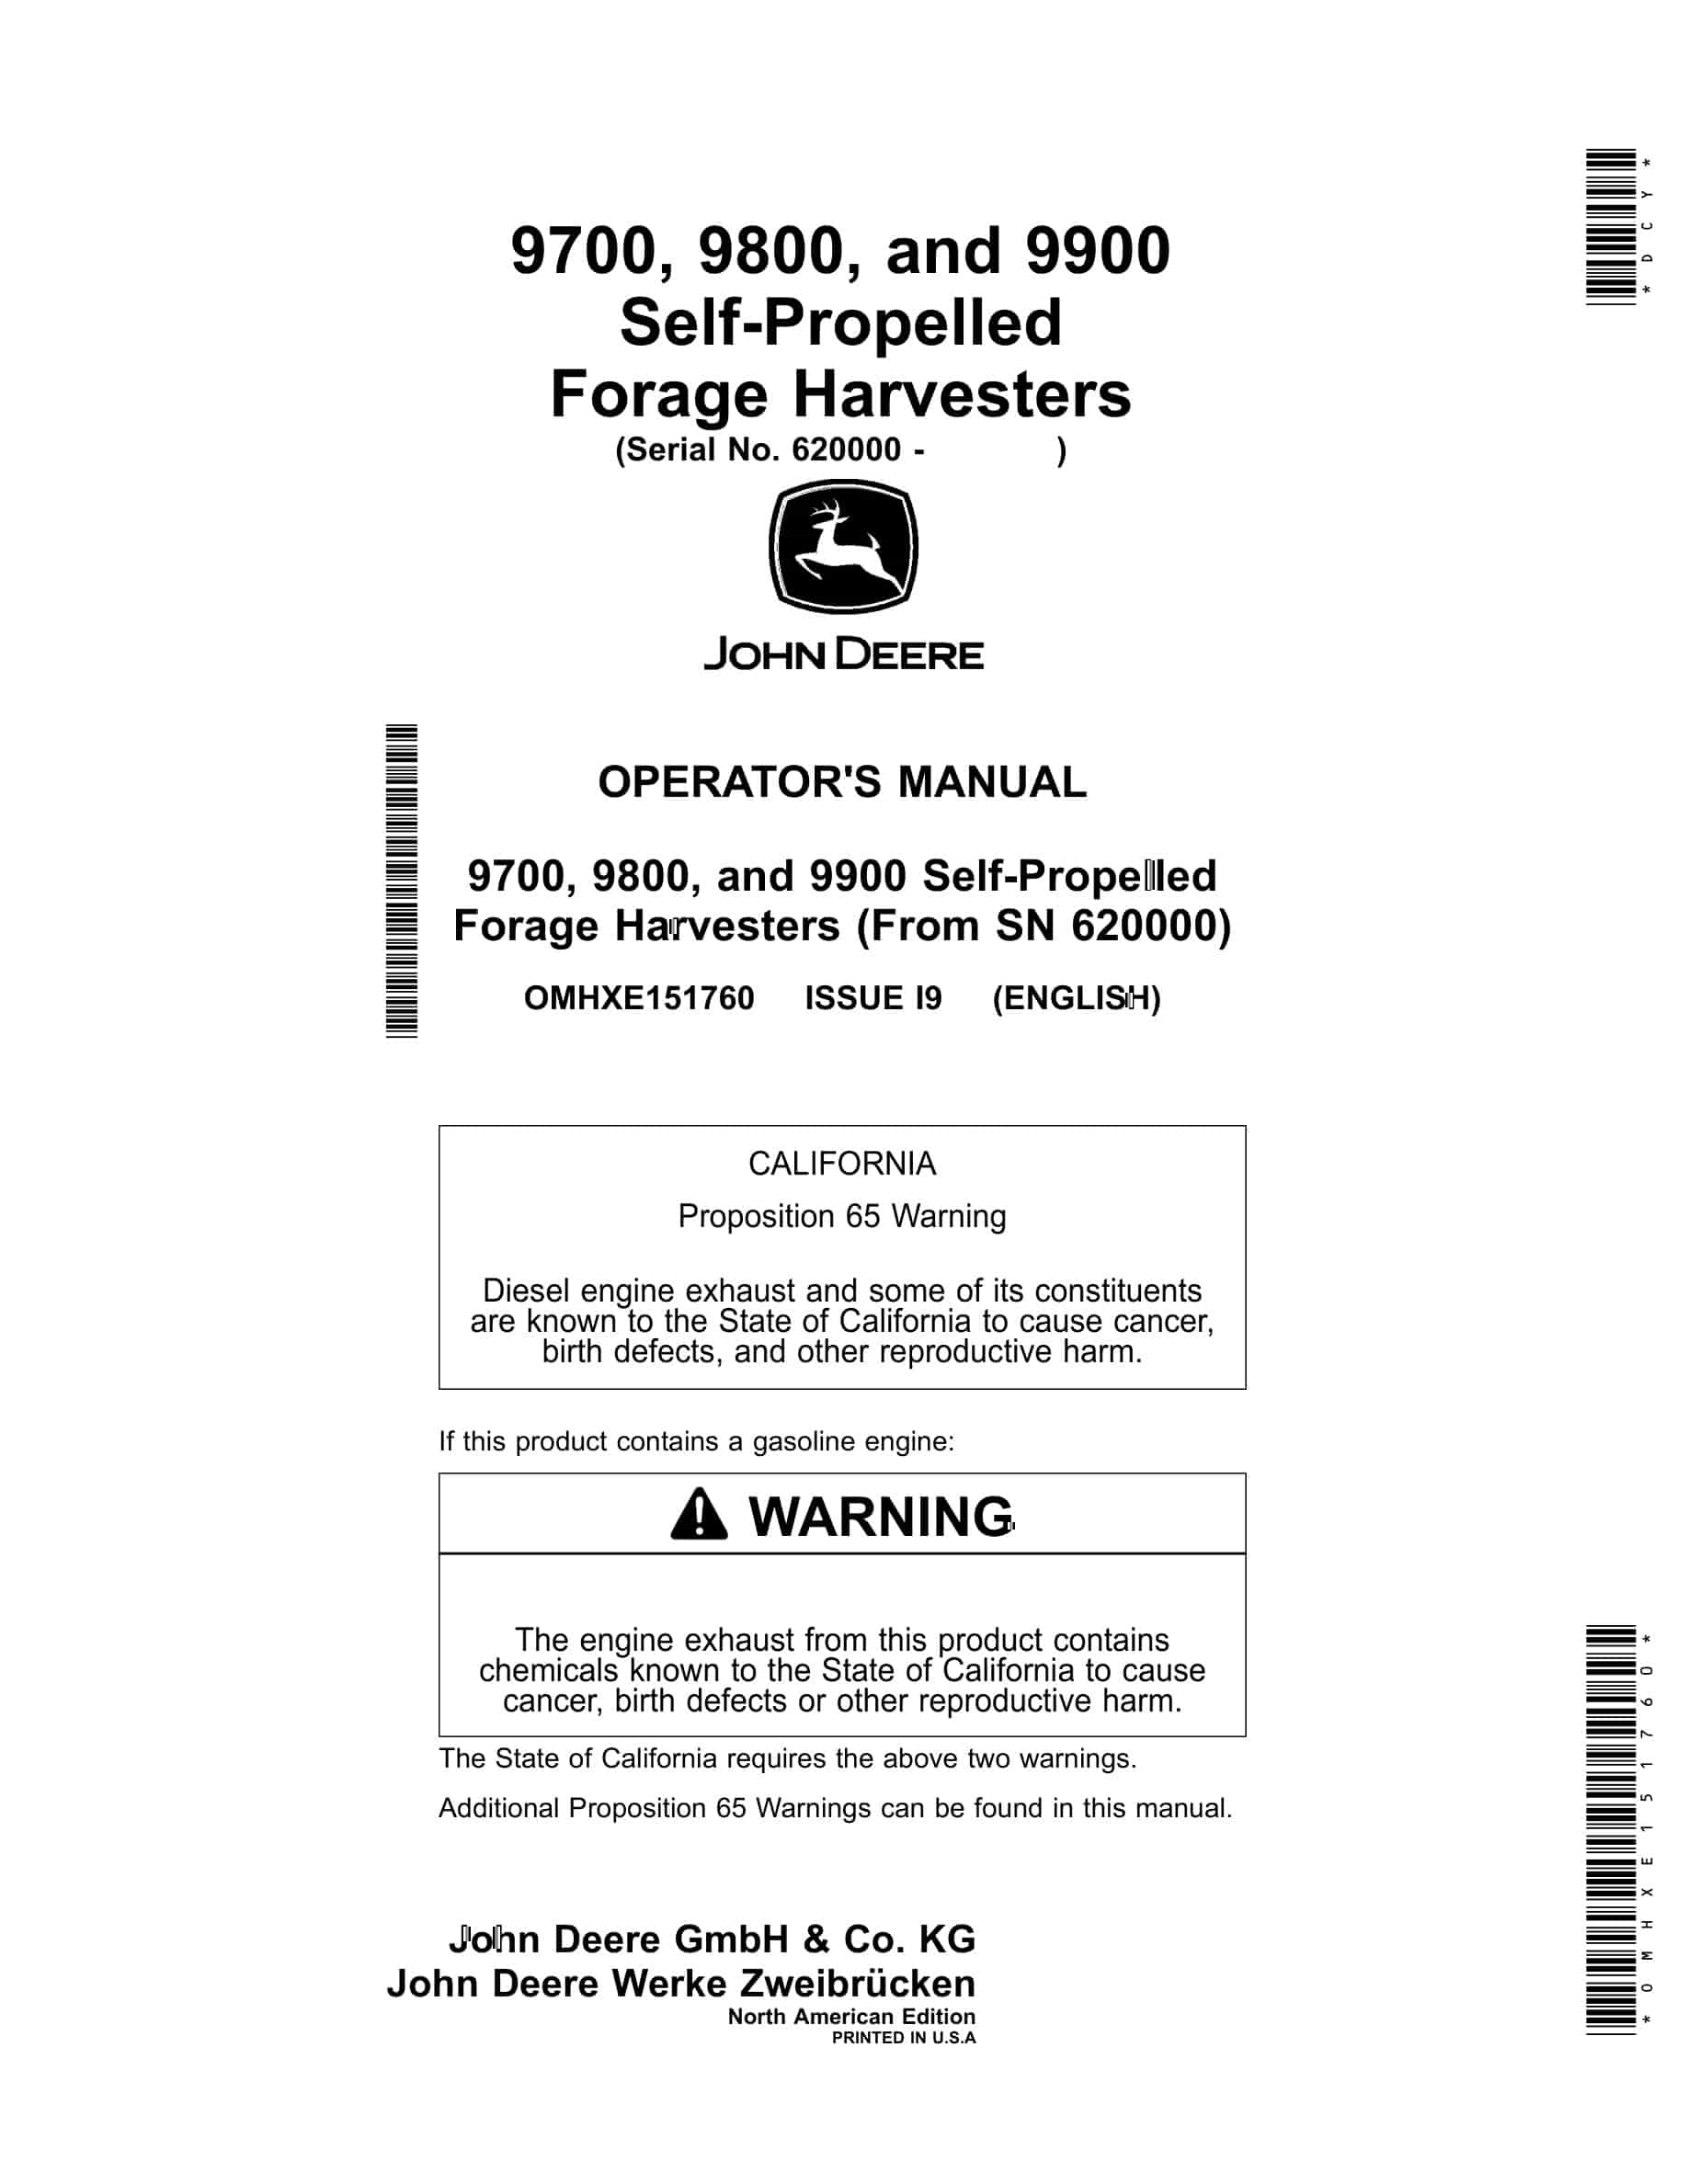 John Deere 9700, 9800, and 9900 Self-Propelled Forage Harvester Operator Manual OMHXE151760-1